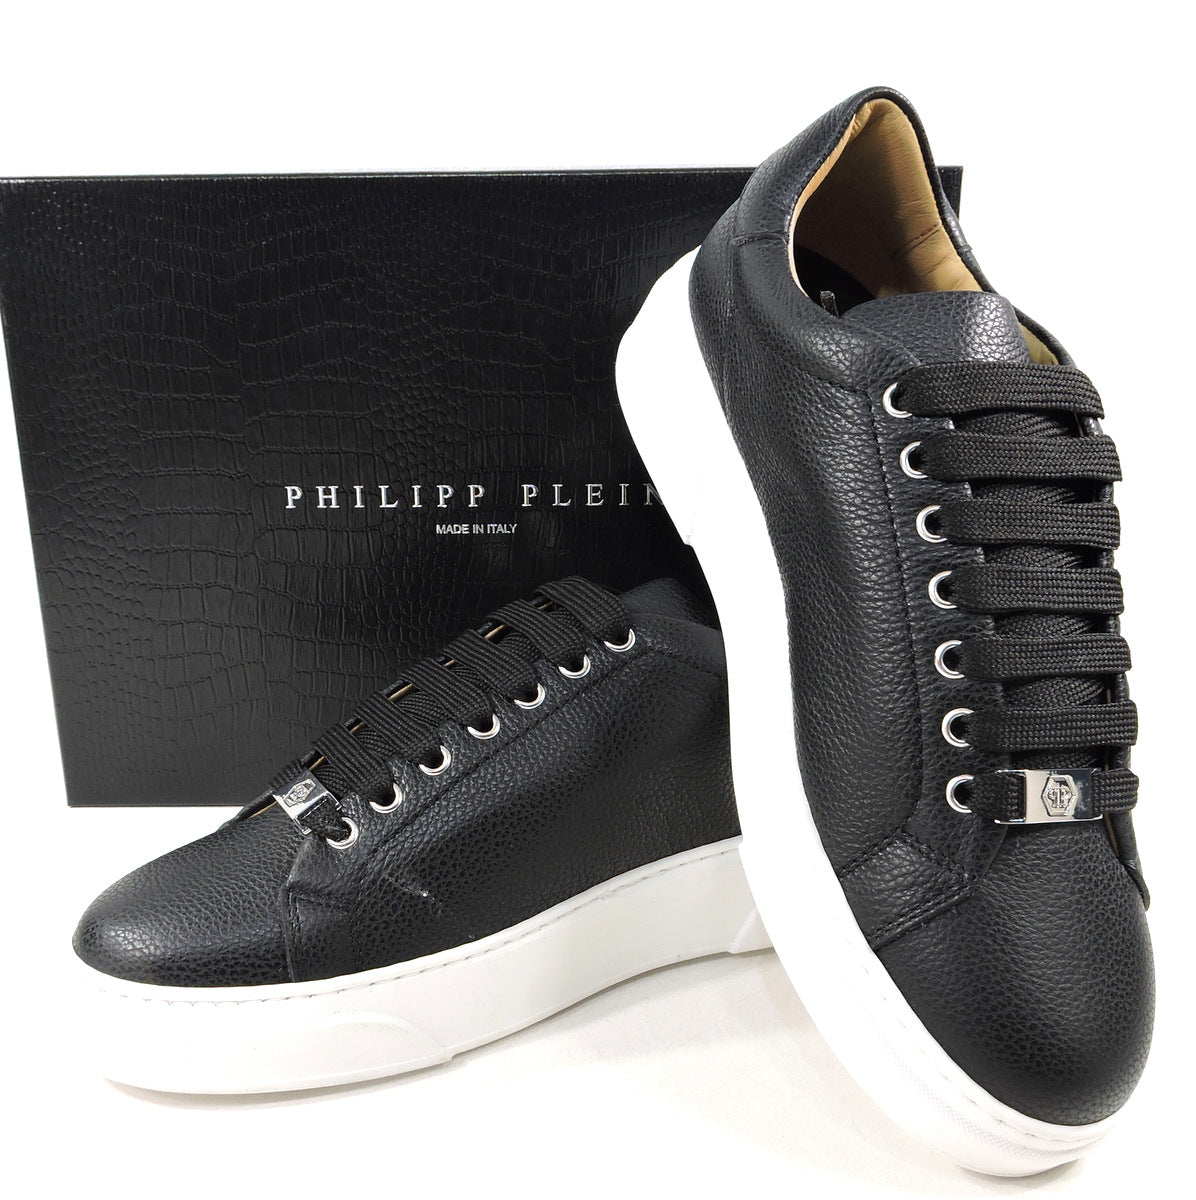 PHILIPP PLEIN 🇮🇹 BLACK LEATHER COMFORT FASHION – Shoes